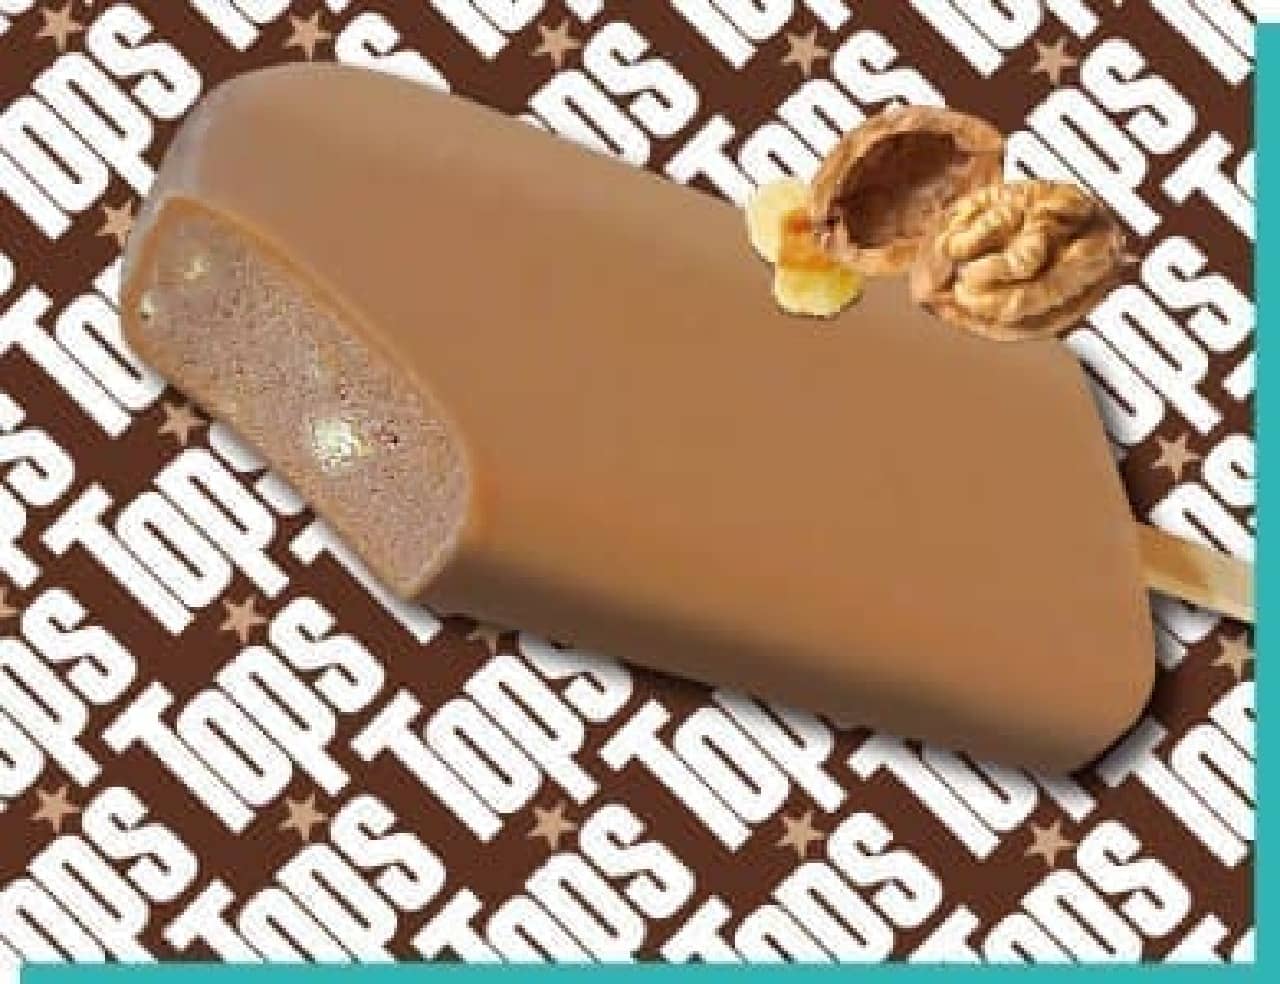 7-ELEVEN "Tops Chocolate Cake Ice Bar"